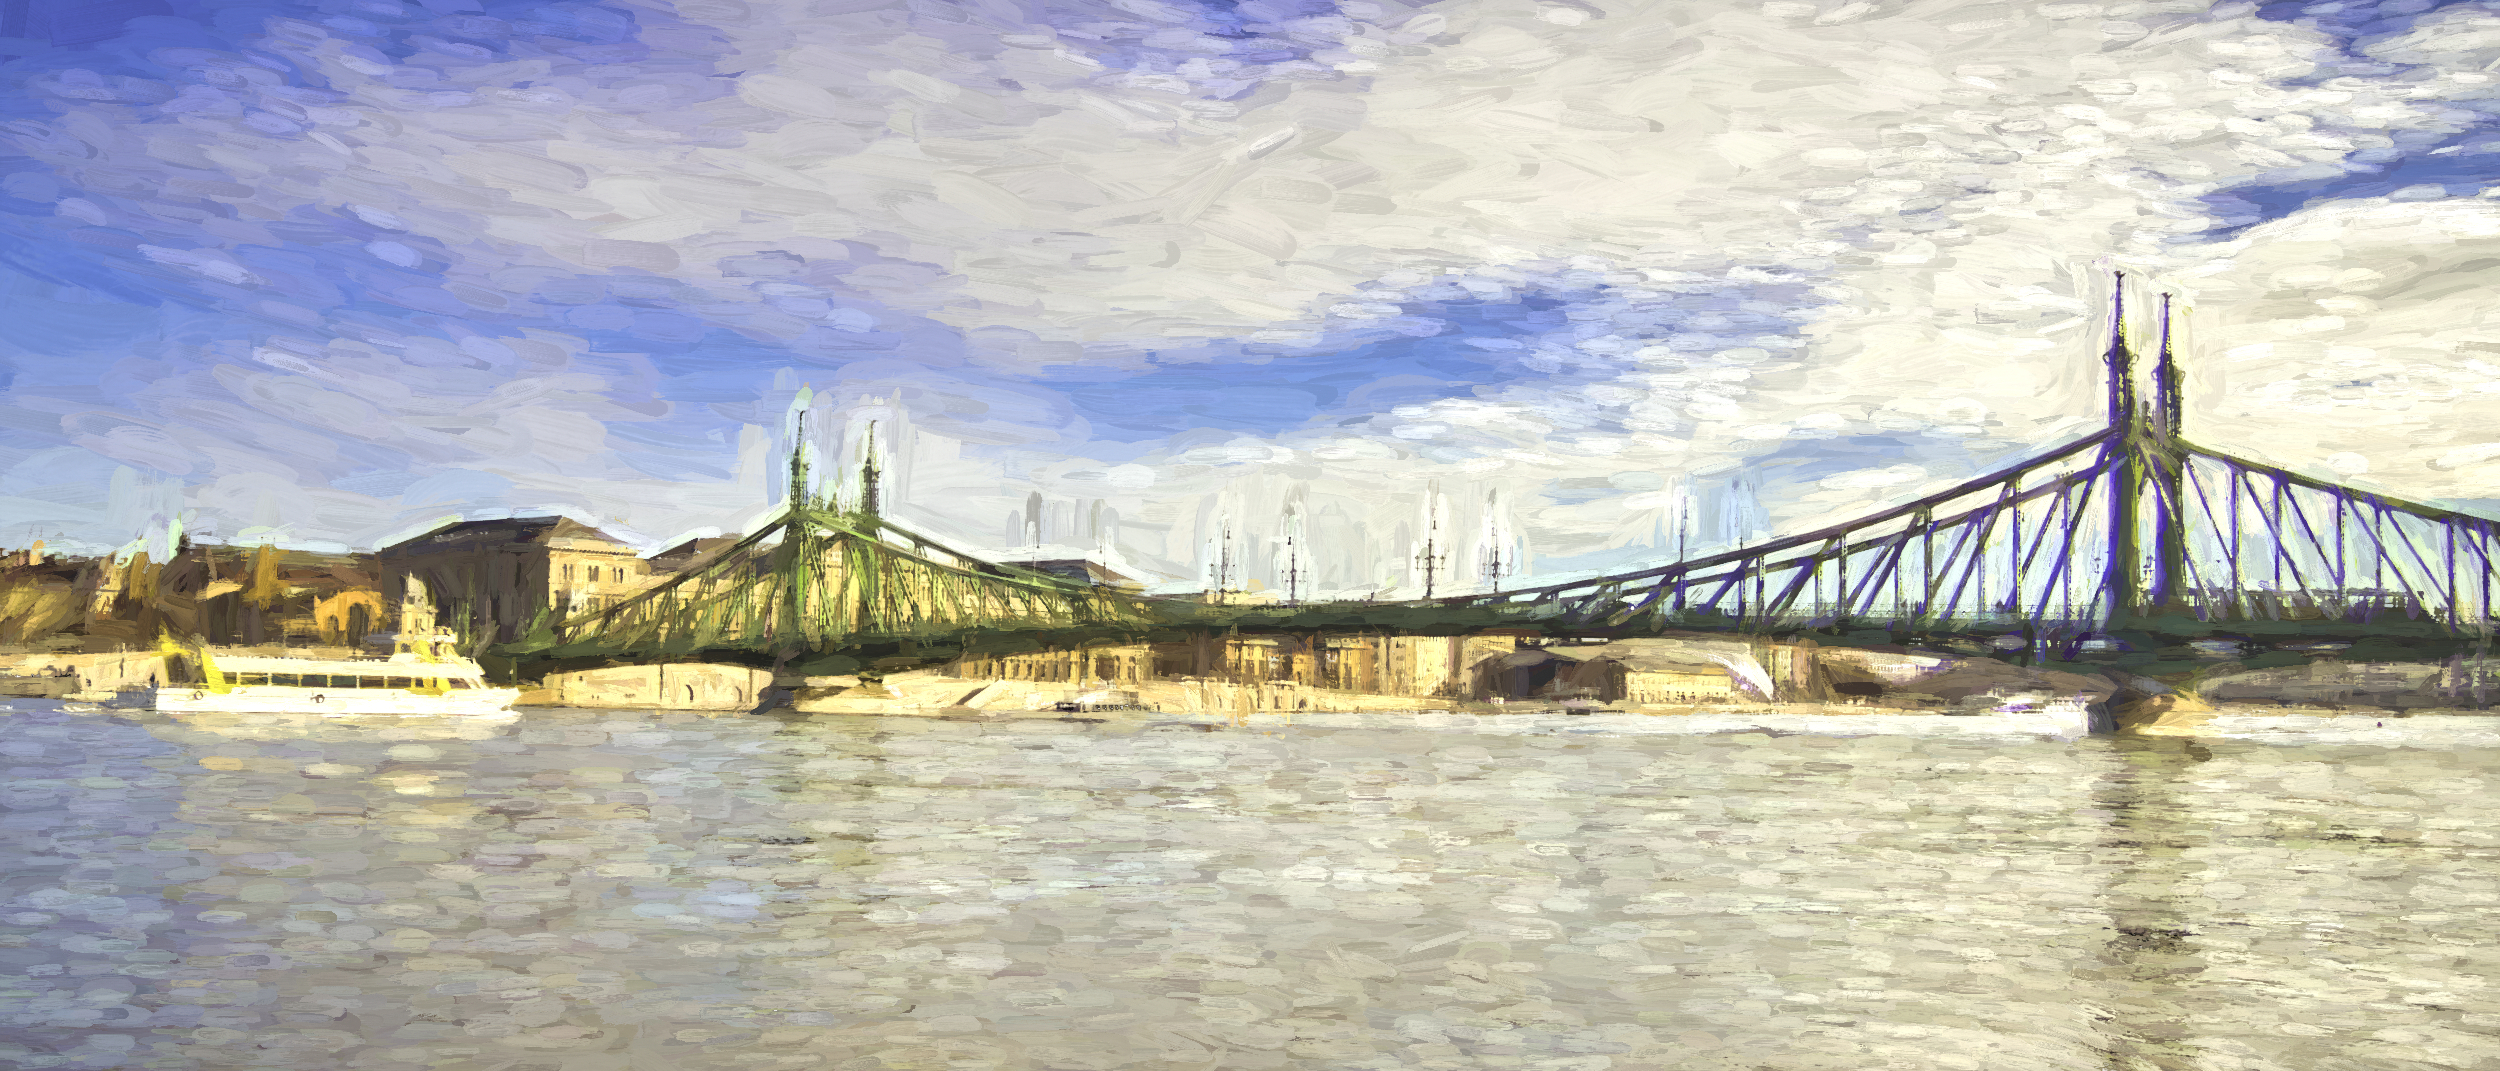 Liberty Bridge across the Danube River in Budapest, Hungary